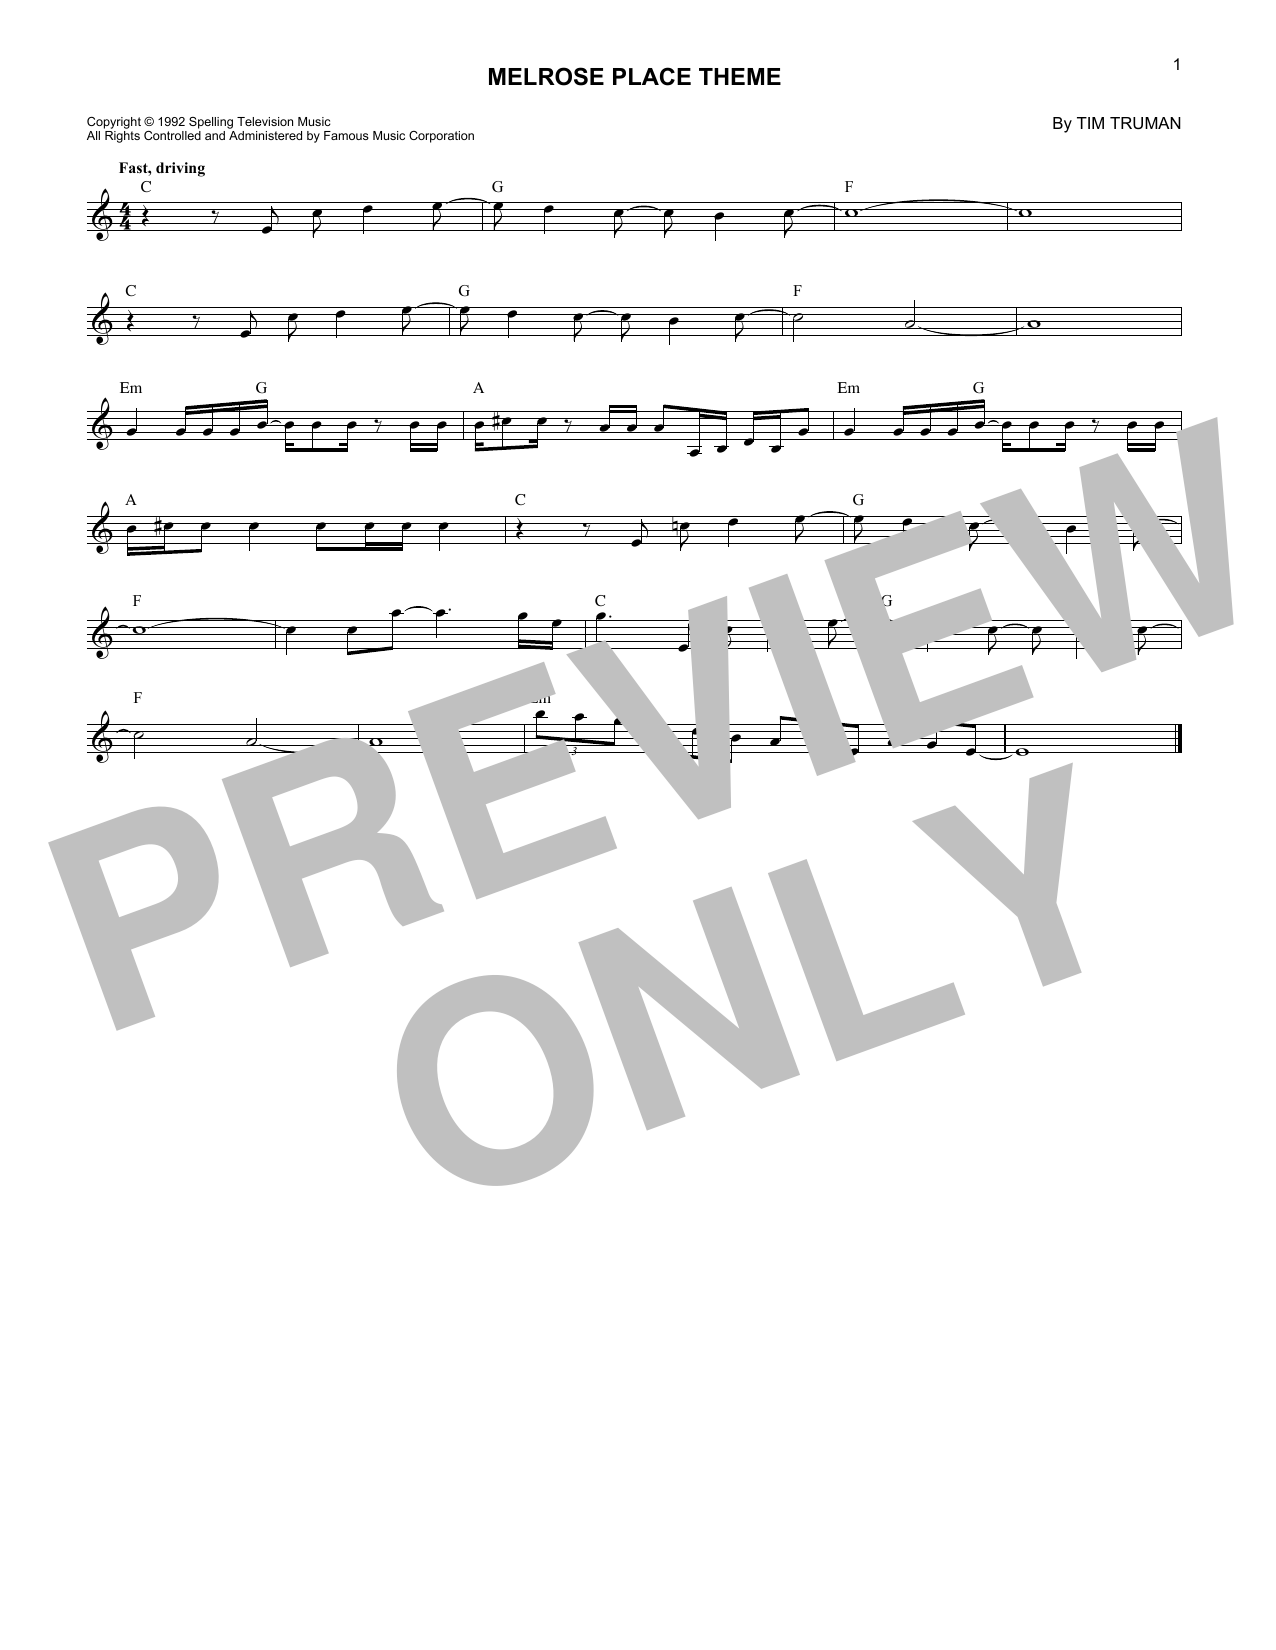 Tim Truman Melrose Place Theme Sheet Music Notes & Chords for Melody Line, Lyrics & Chords - Download or Print PDF